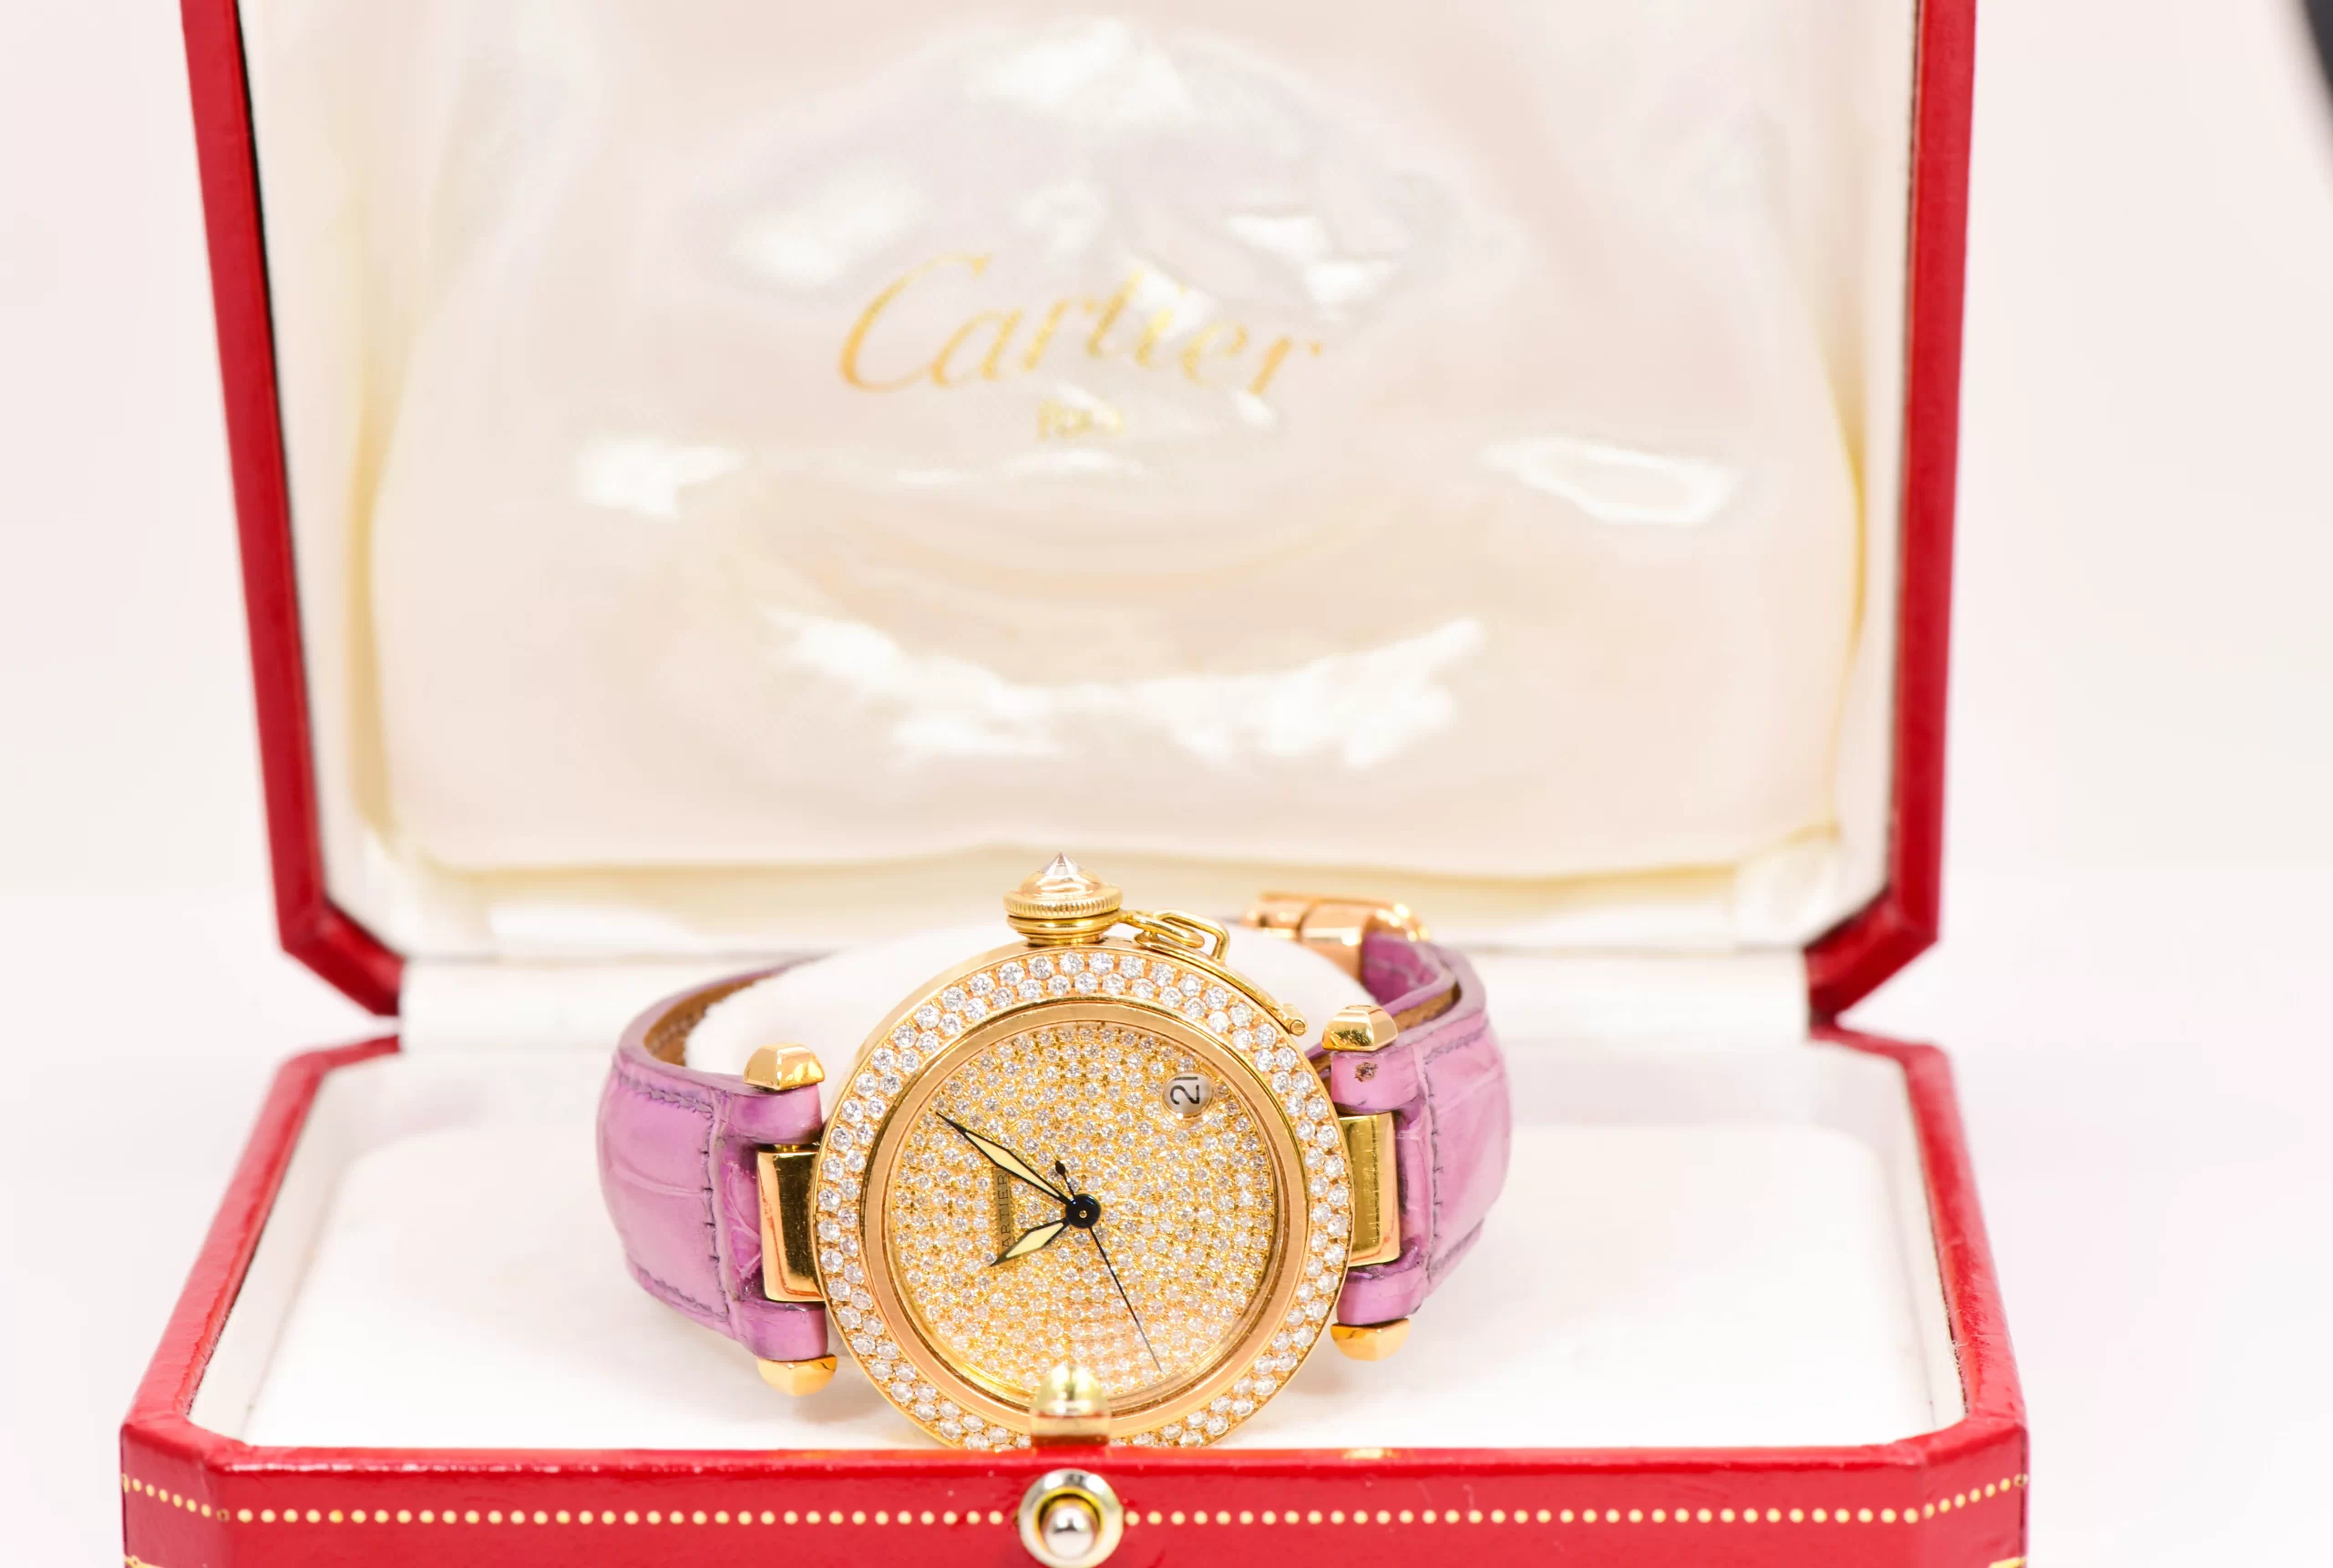 Cartier Pasha Watch Diamond Pave 18k Yellow Gold